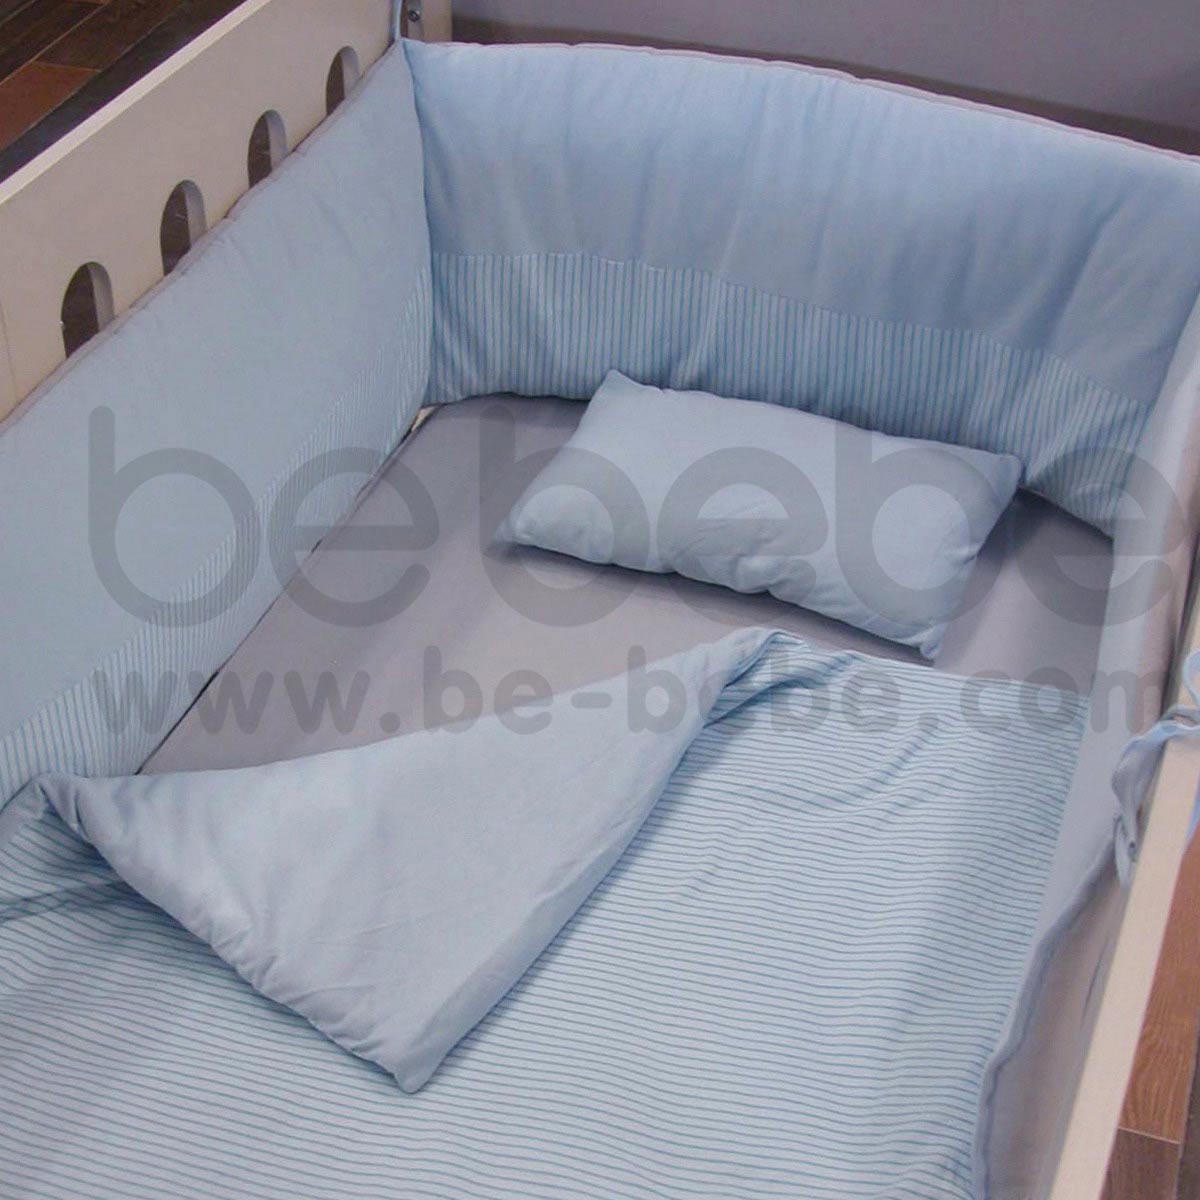 be bebe:Bedding Set 60x120 (5 Pcs.)/Blue